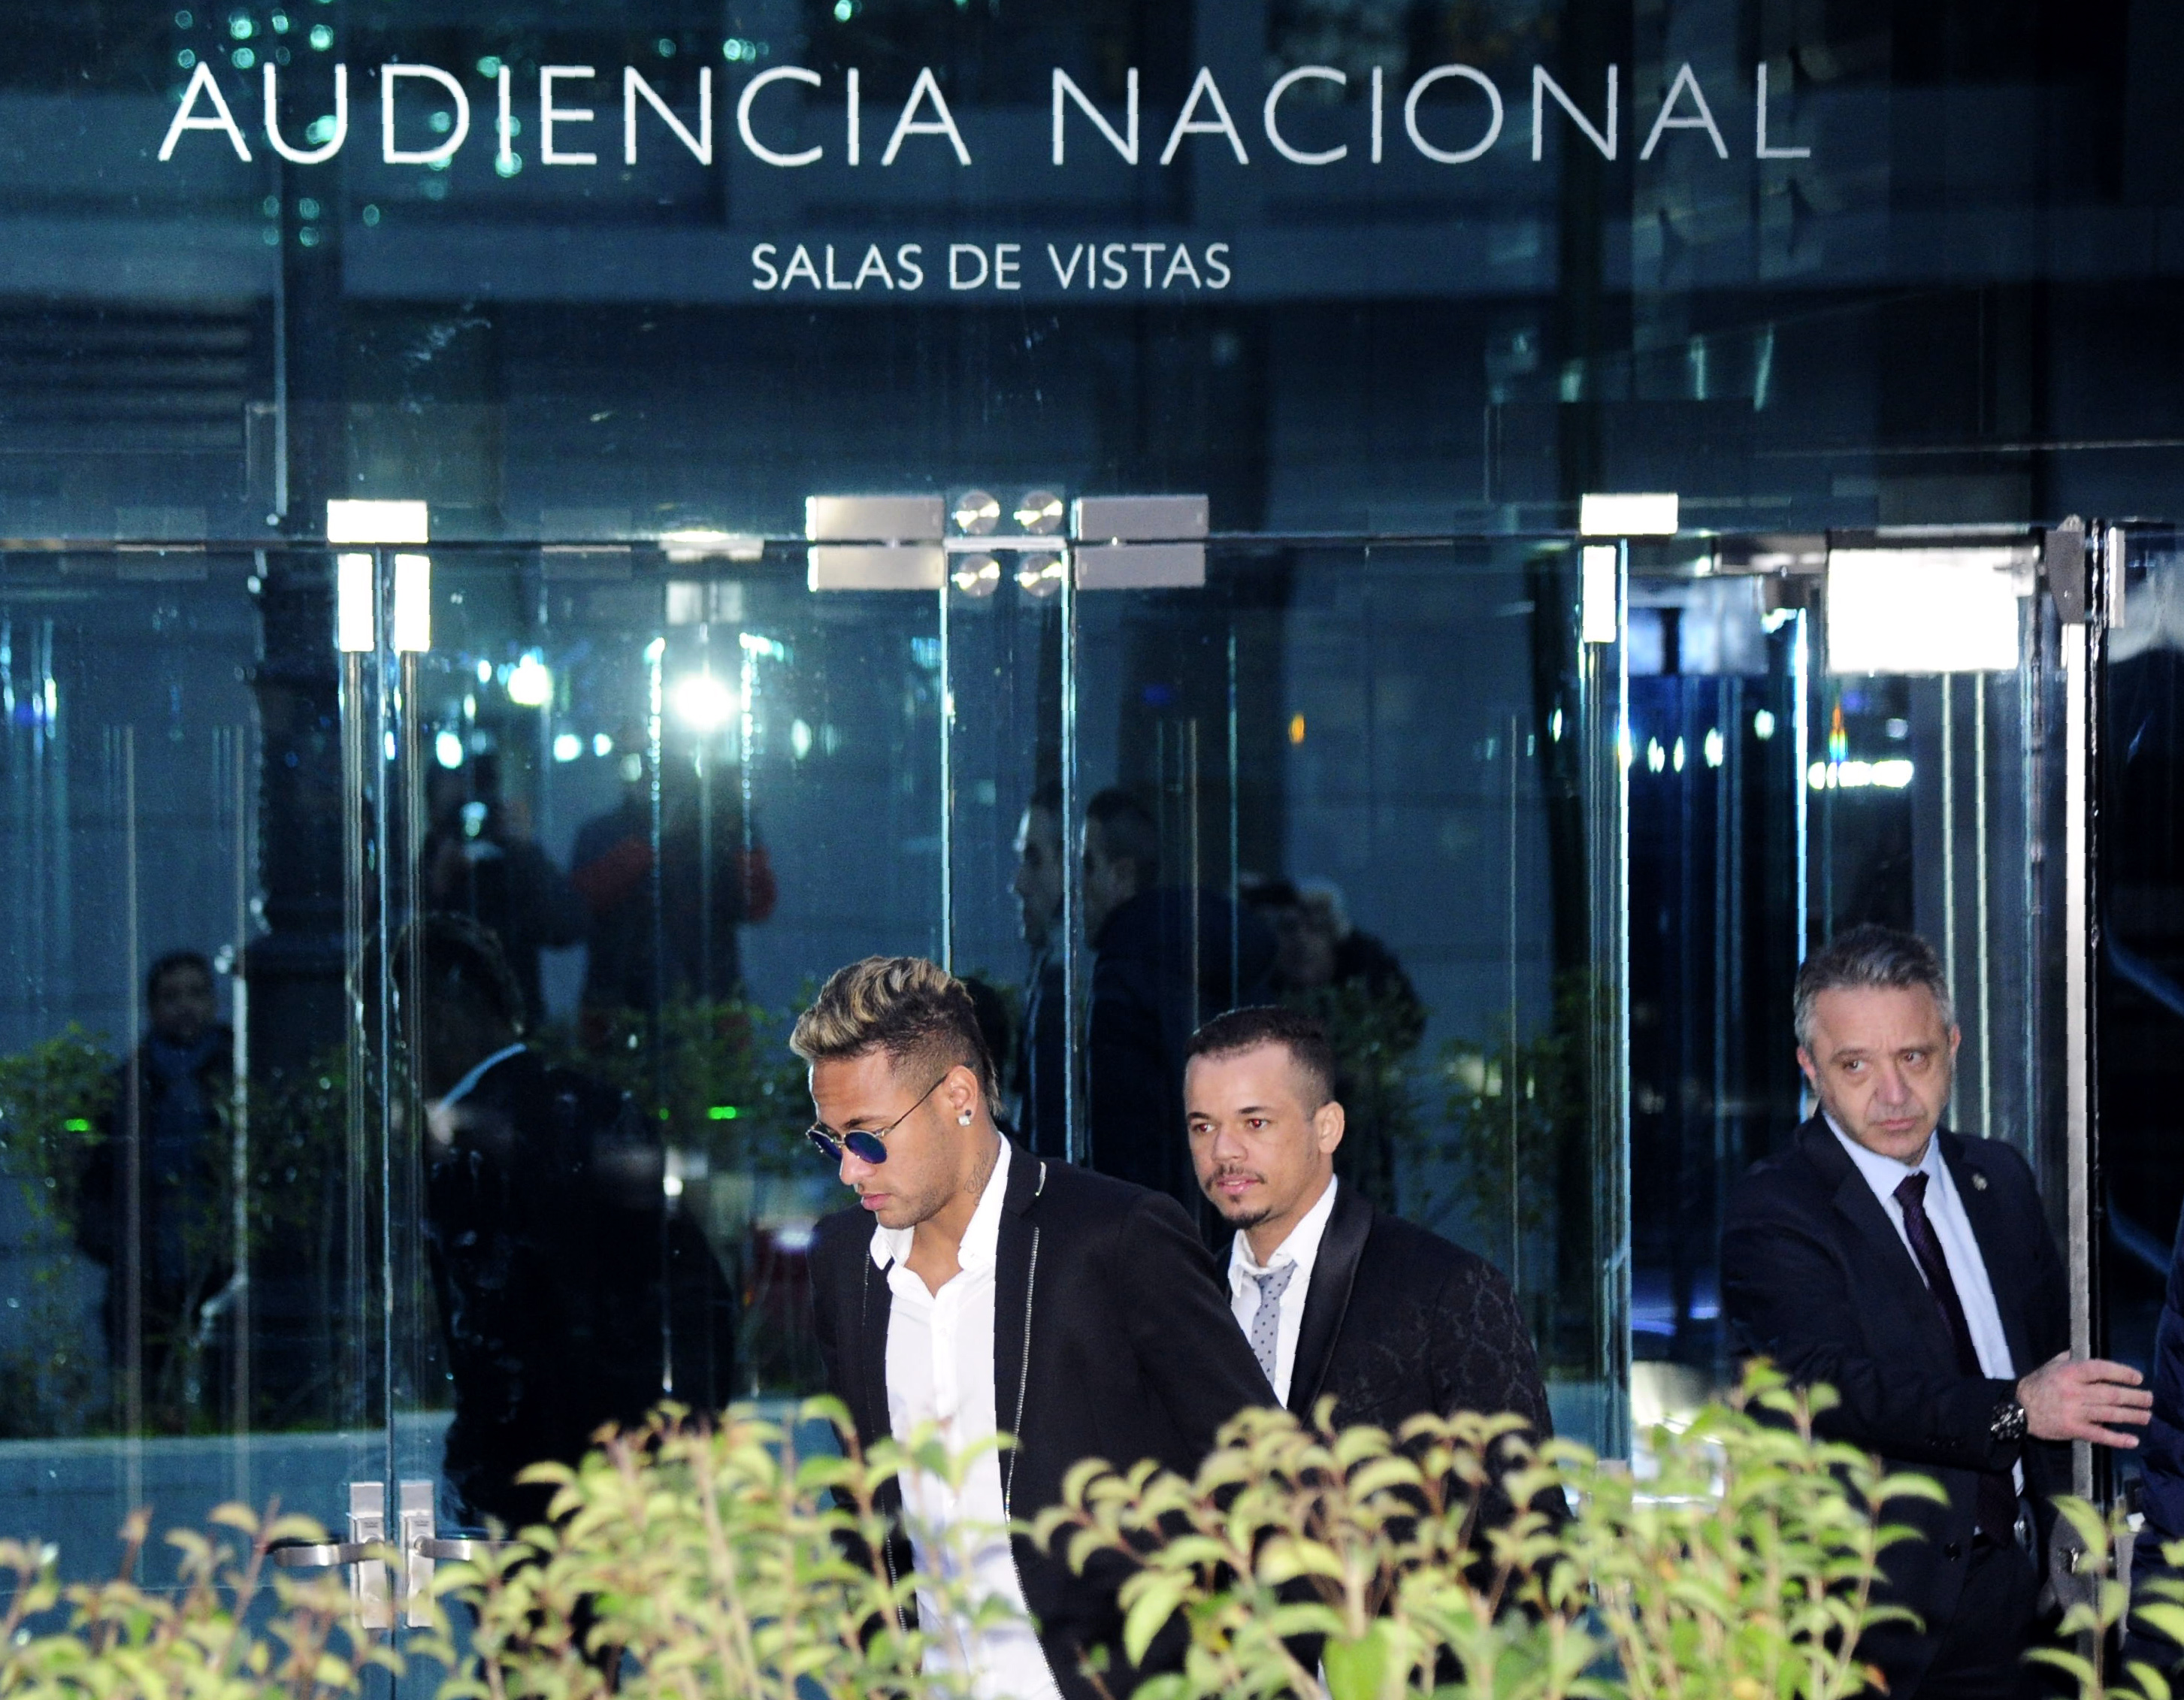 Neymar al momento de salir de Audiencia Nacional esta semana